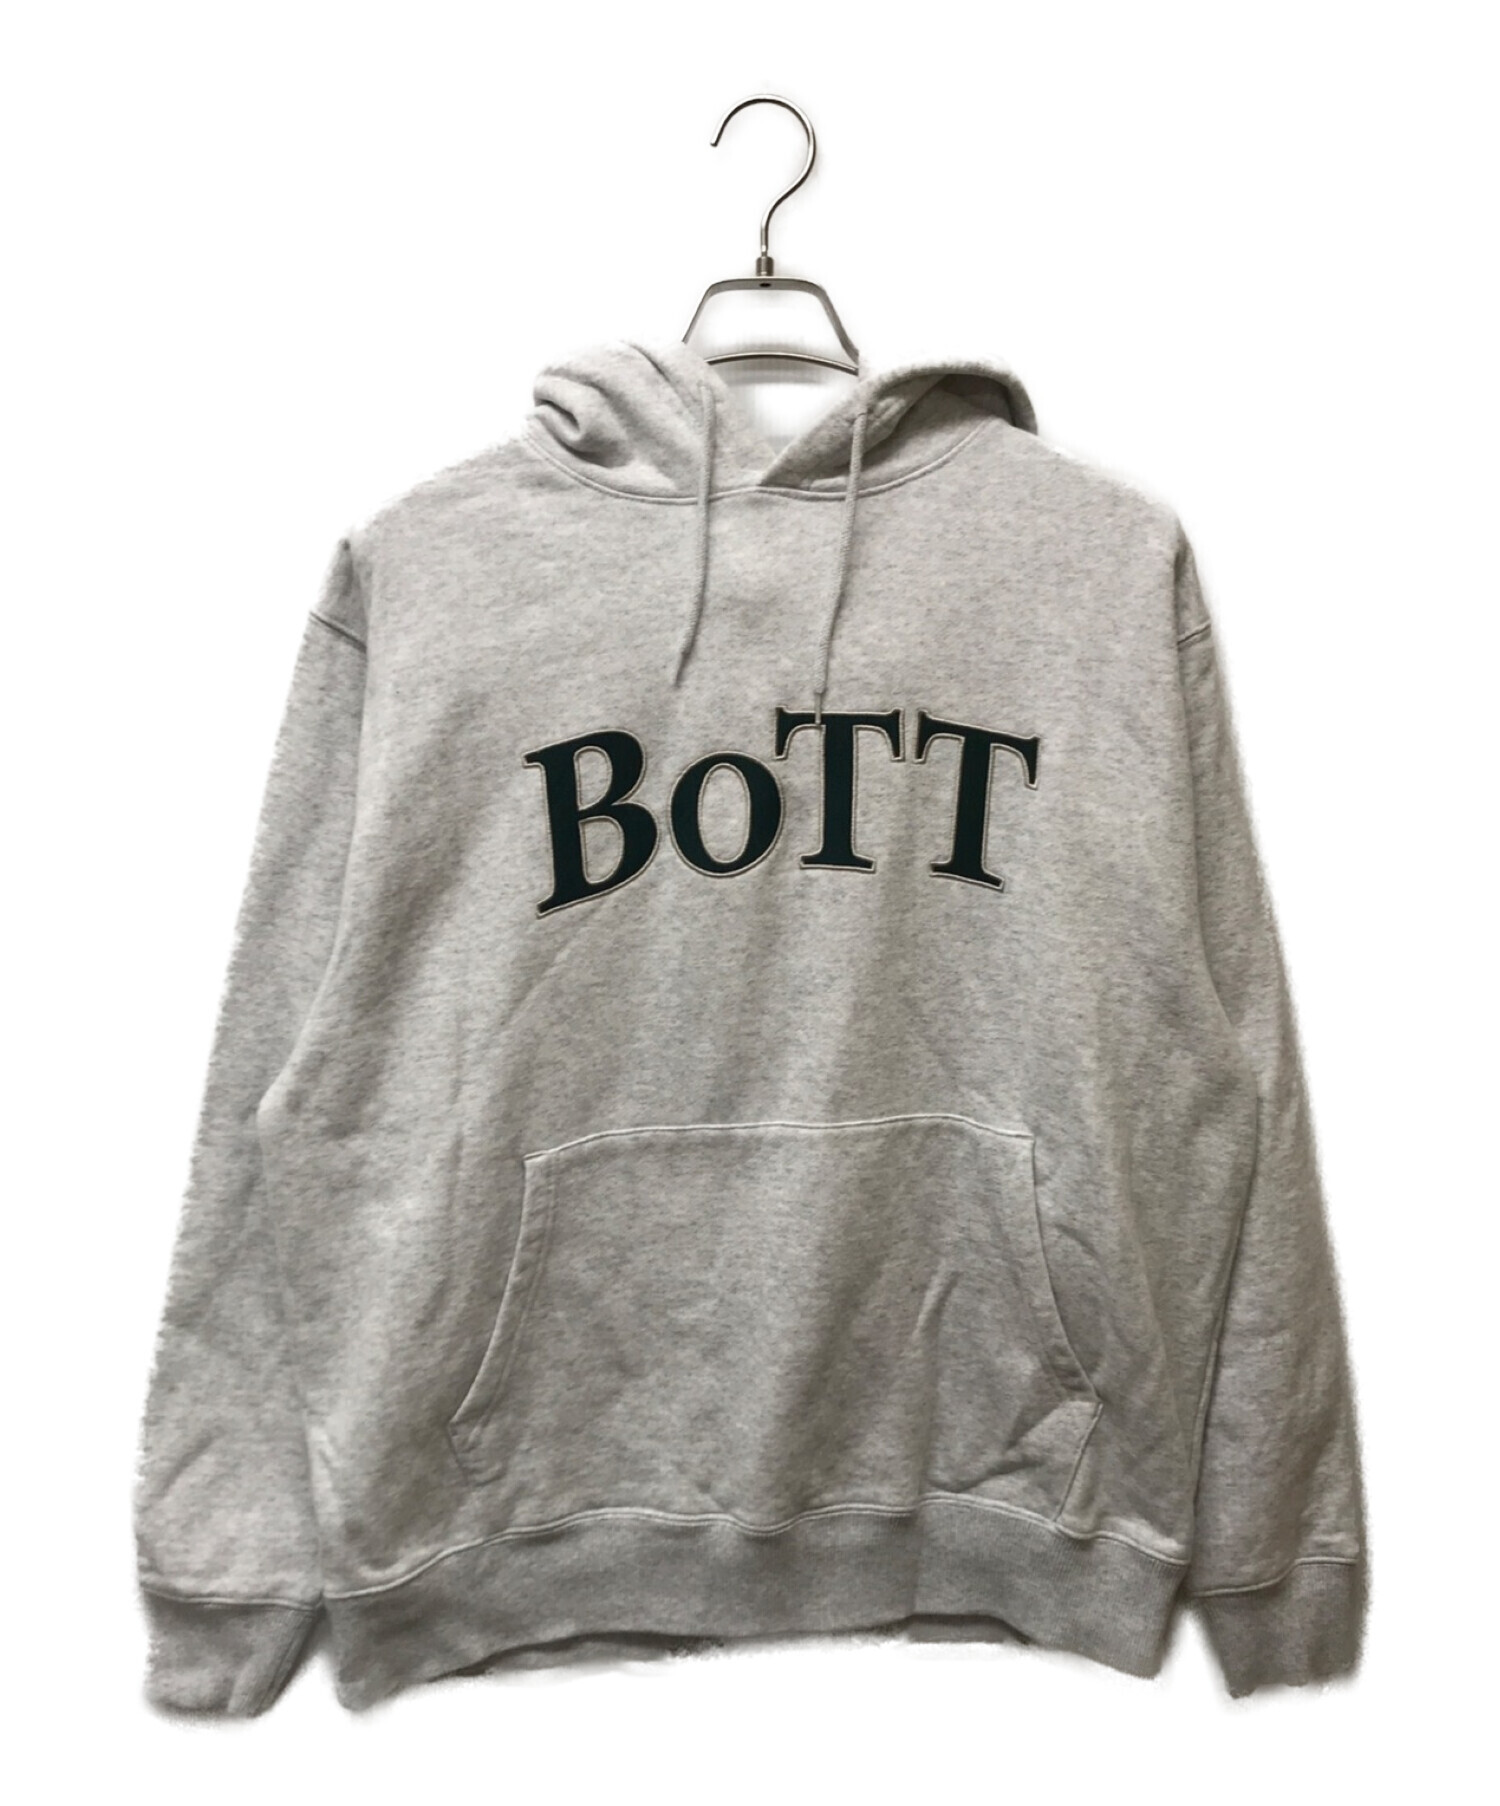 BoTT OG Logo Pullover Hoodie Gray Lサイズ公式サイトにて購入しました